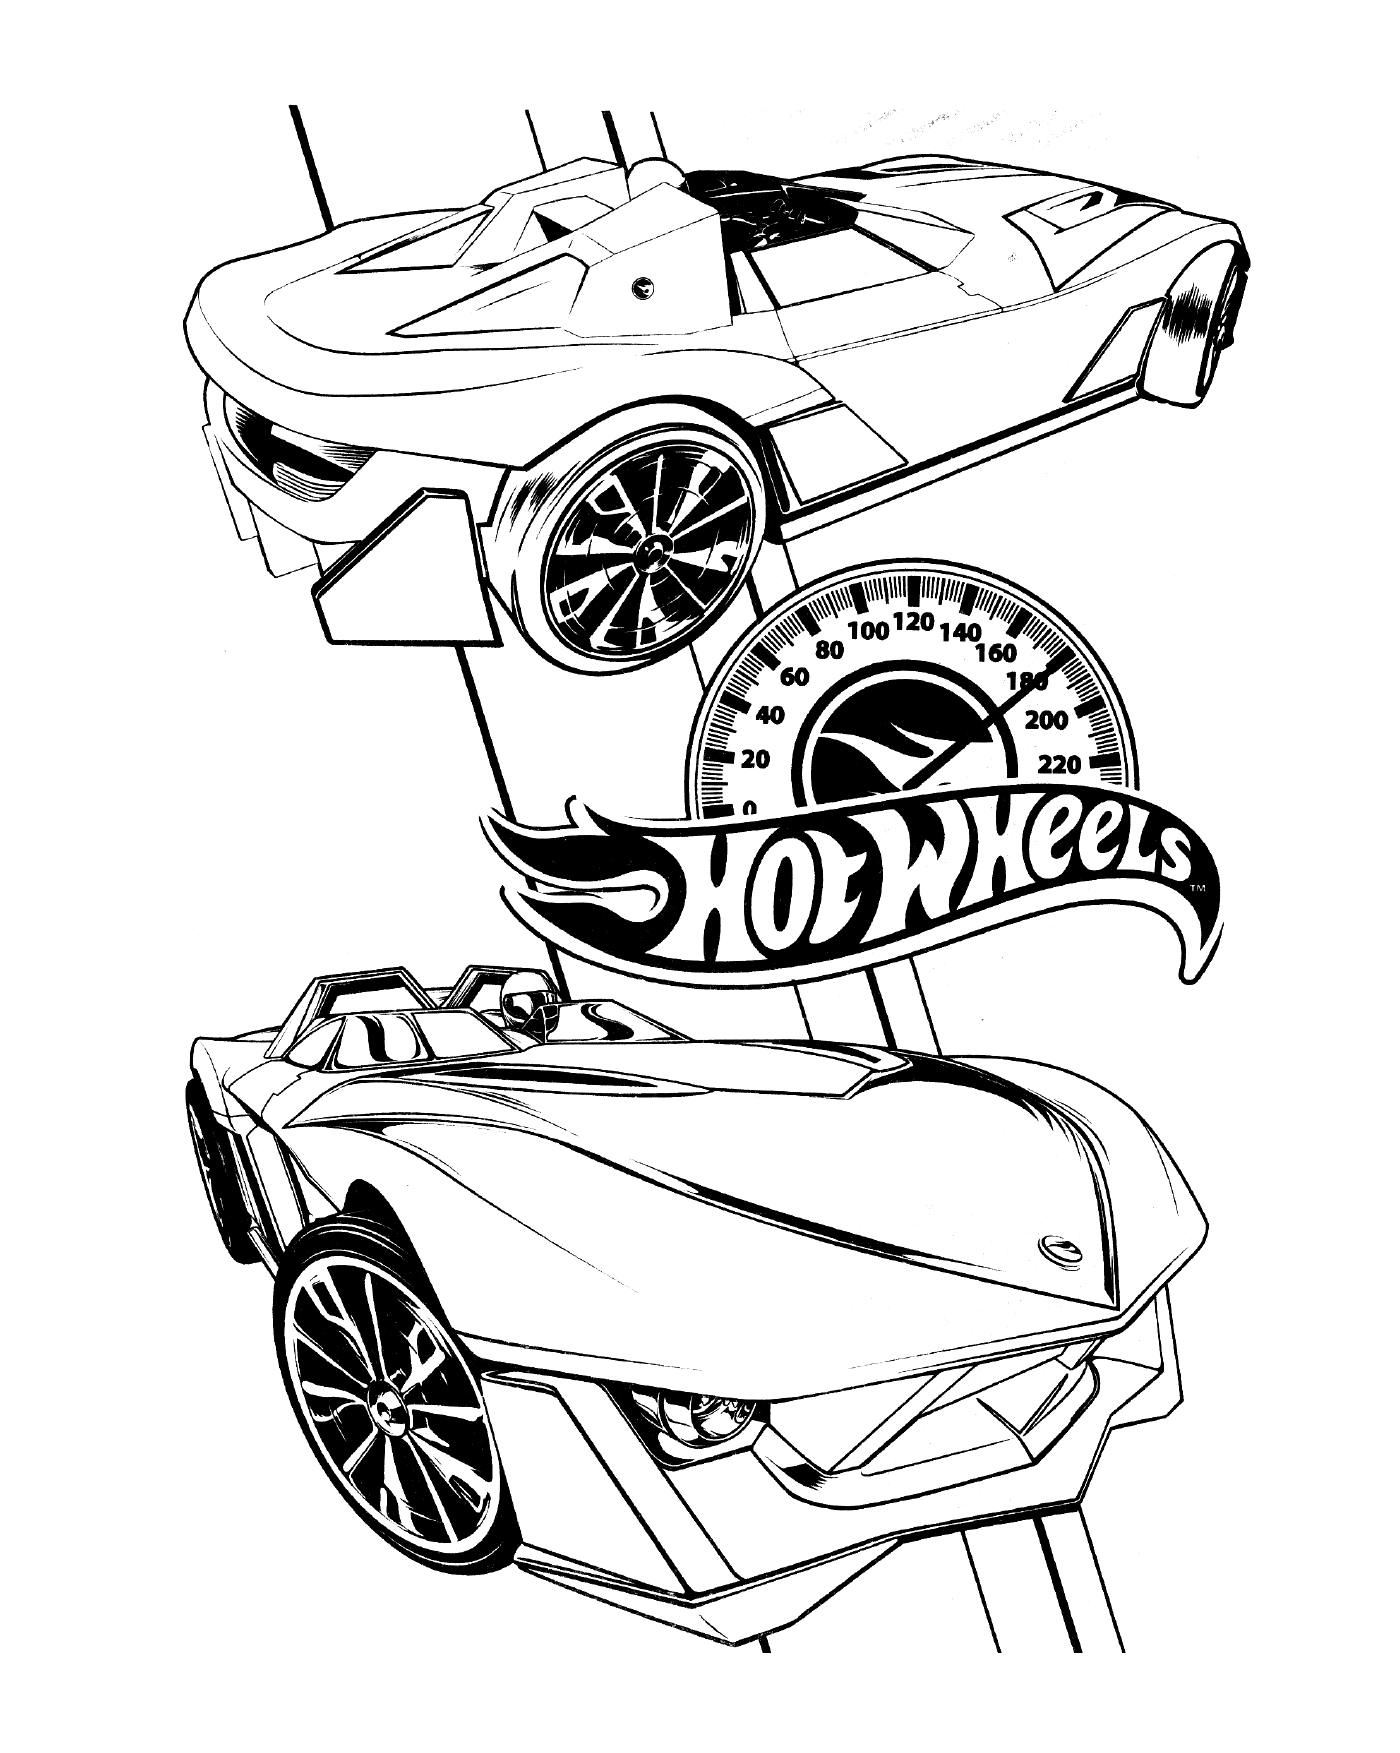   Superbe voiture Hot Wheels 